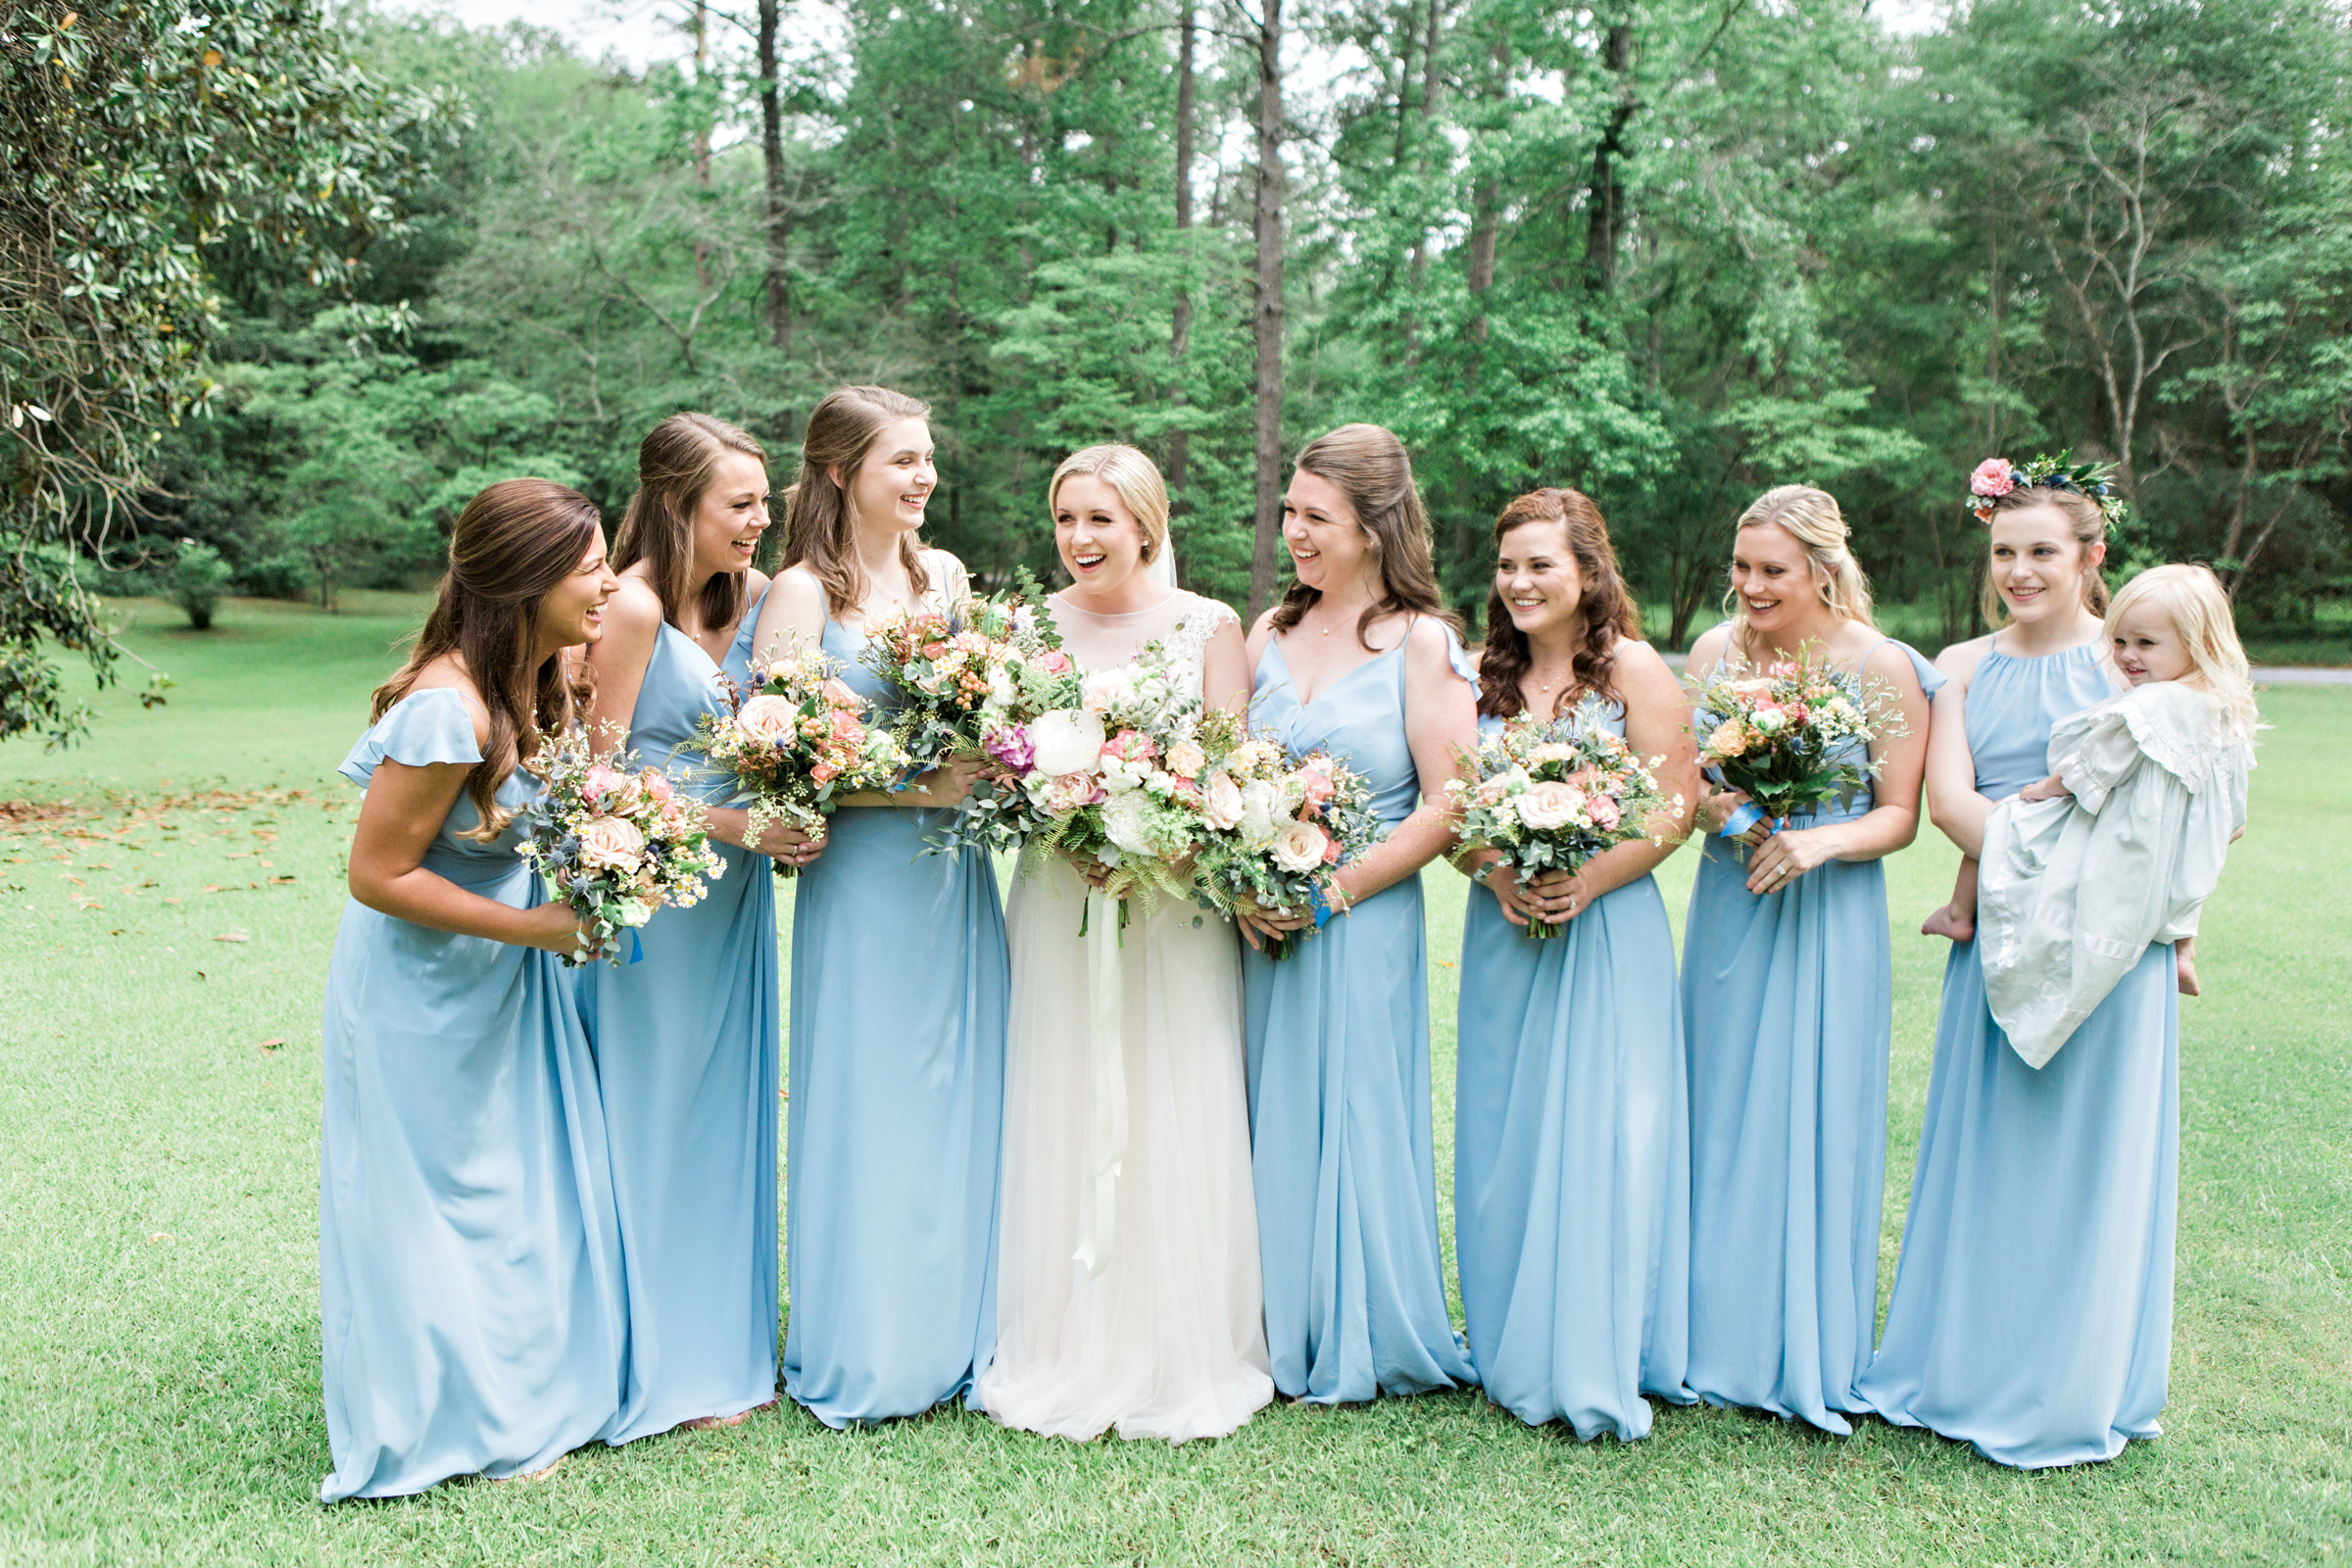 Matty-Drollette-Photography-Alabama-Weddings-Sara and Logan-112.jpg